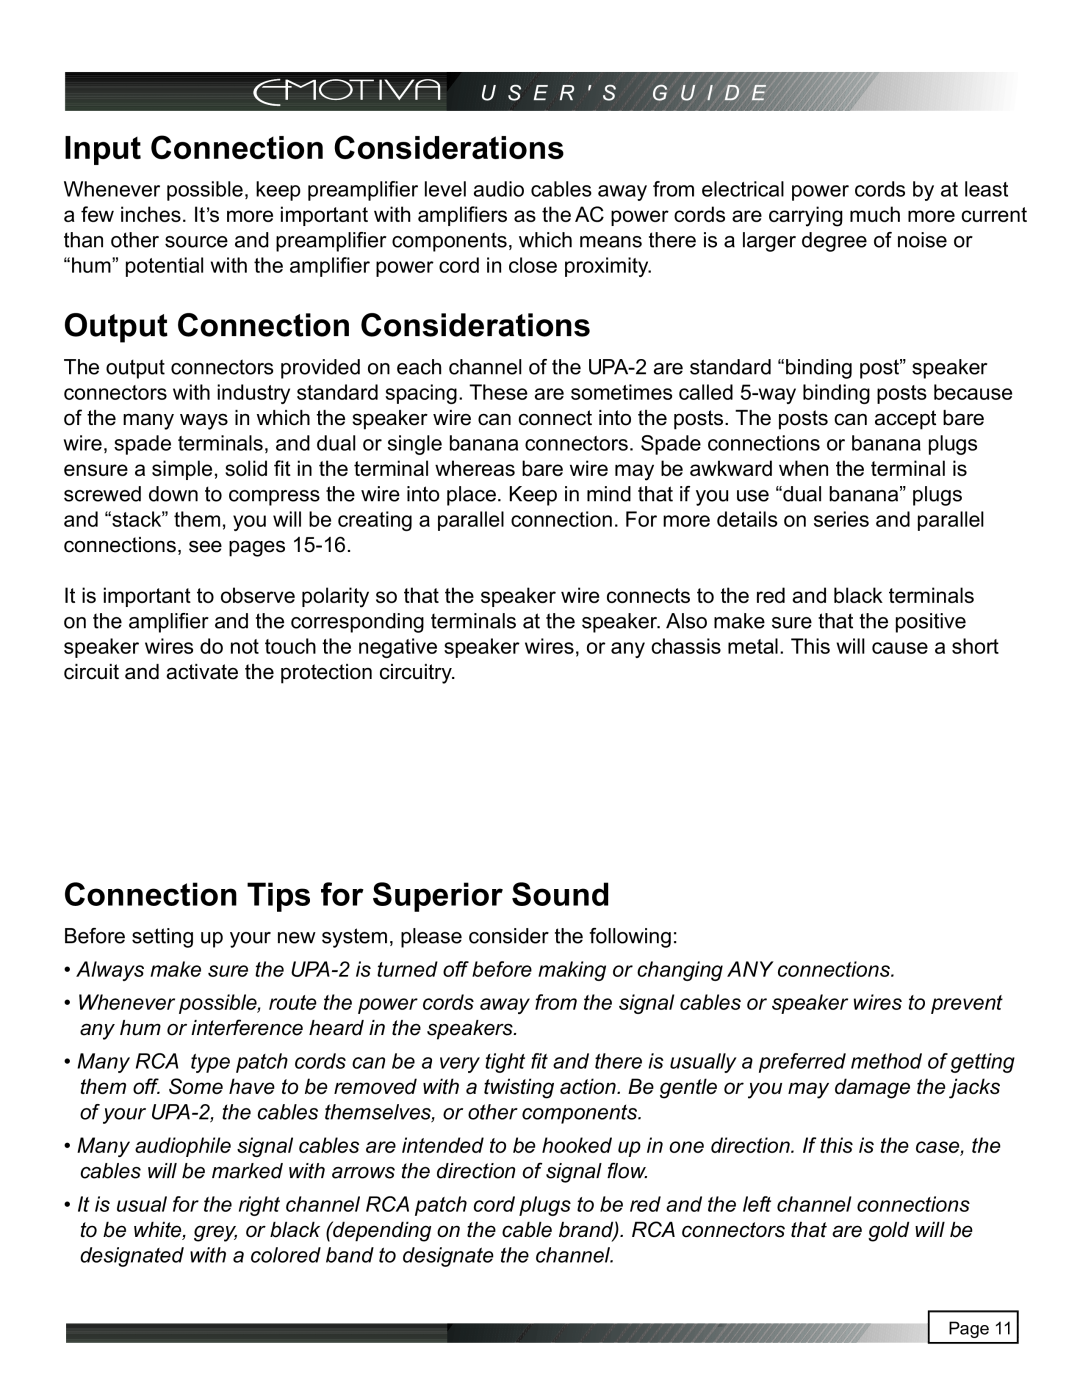 Emotiva UPA-2 manual Input Connection Considerations, Output Connection Considerations, Connection Tips for Superior Sound 